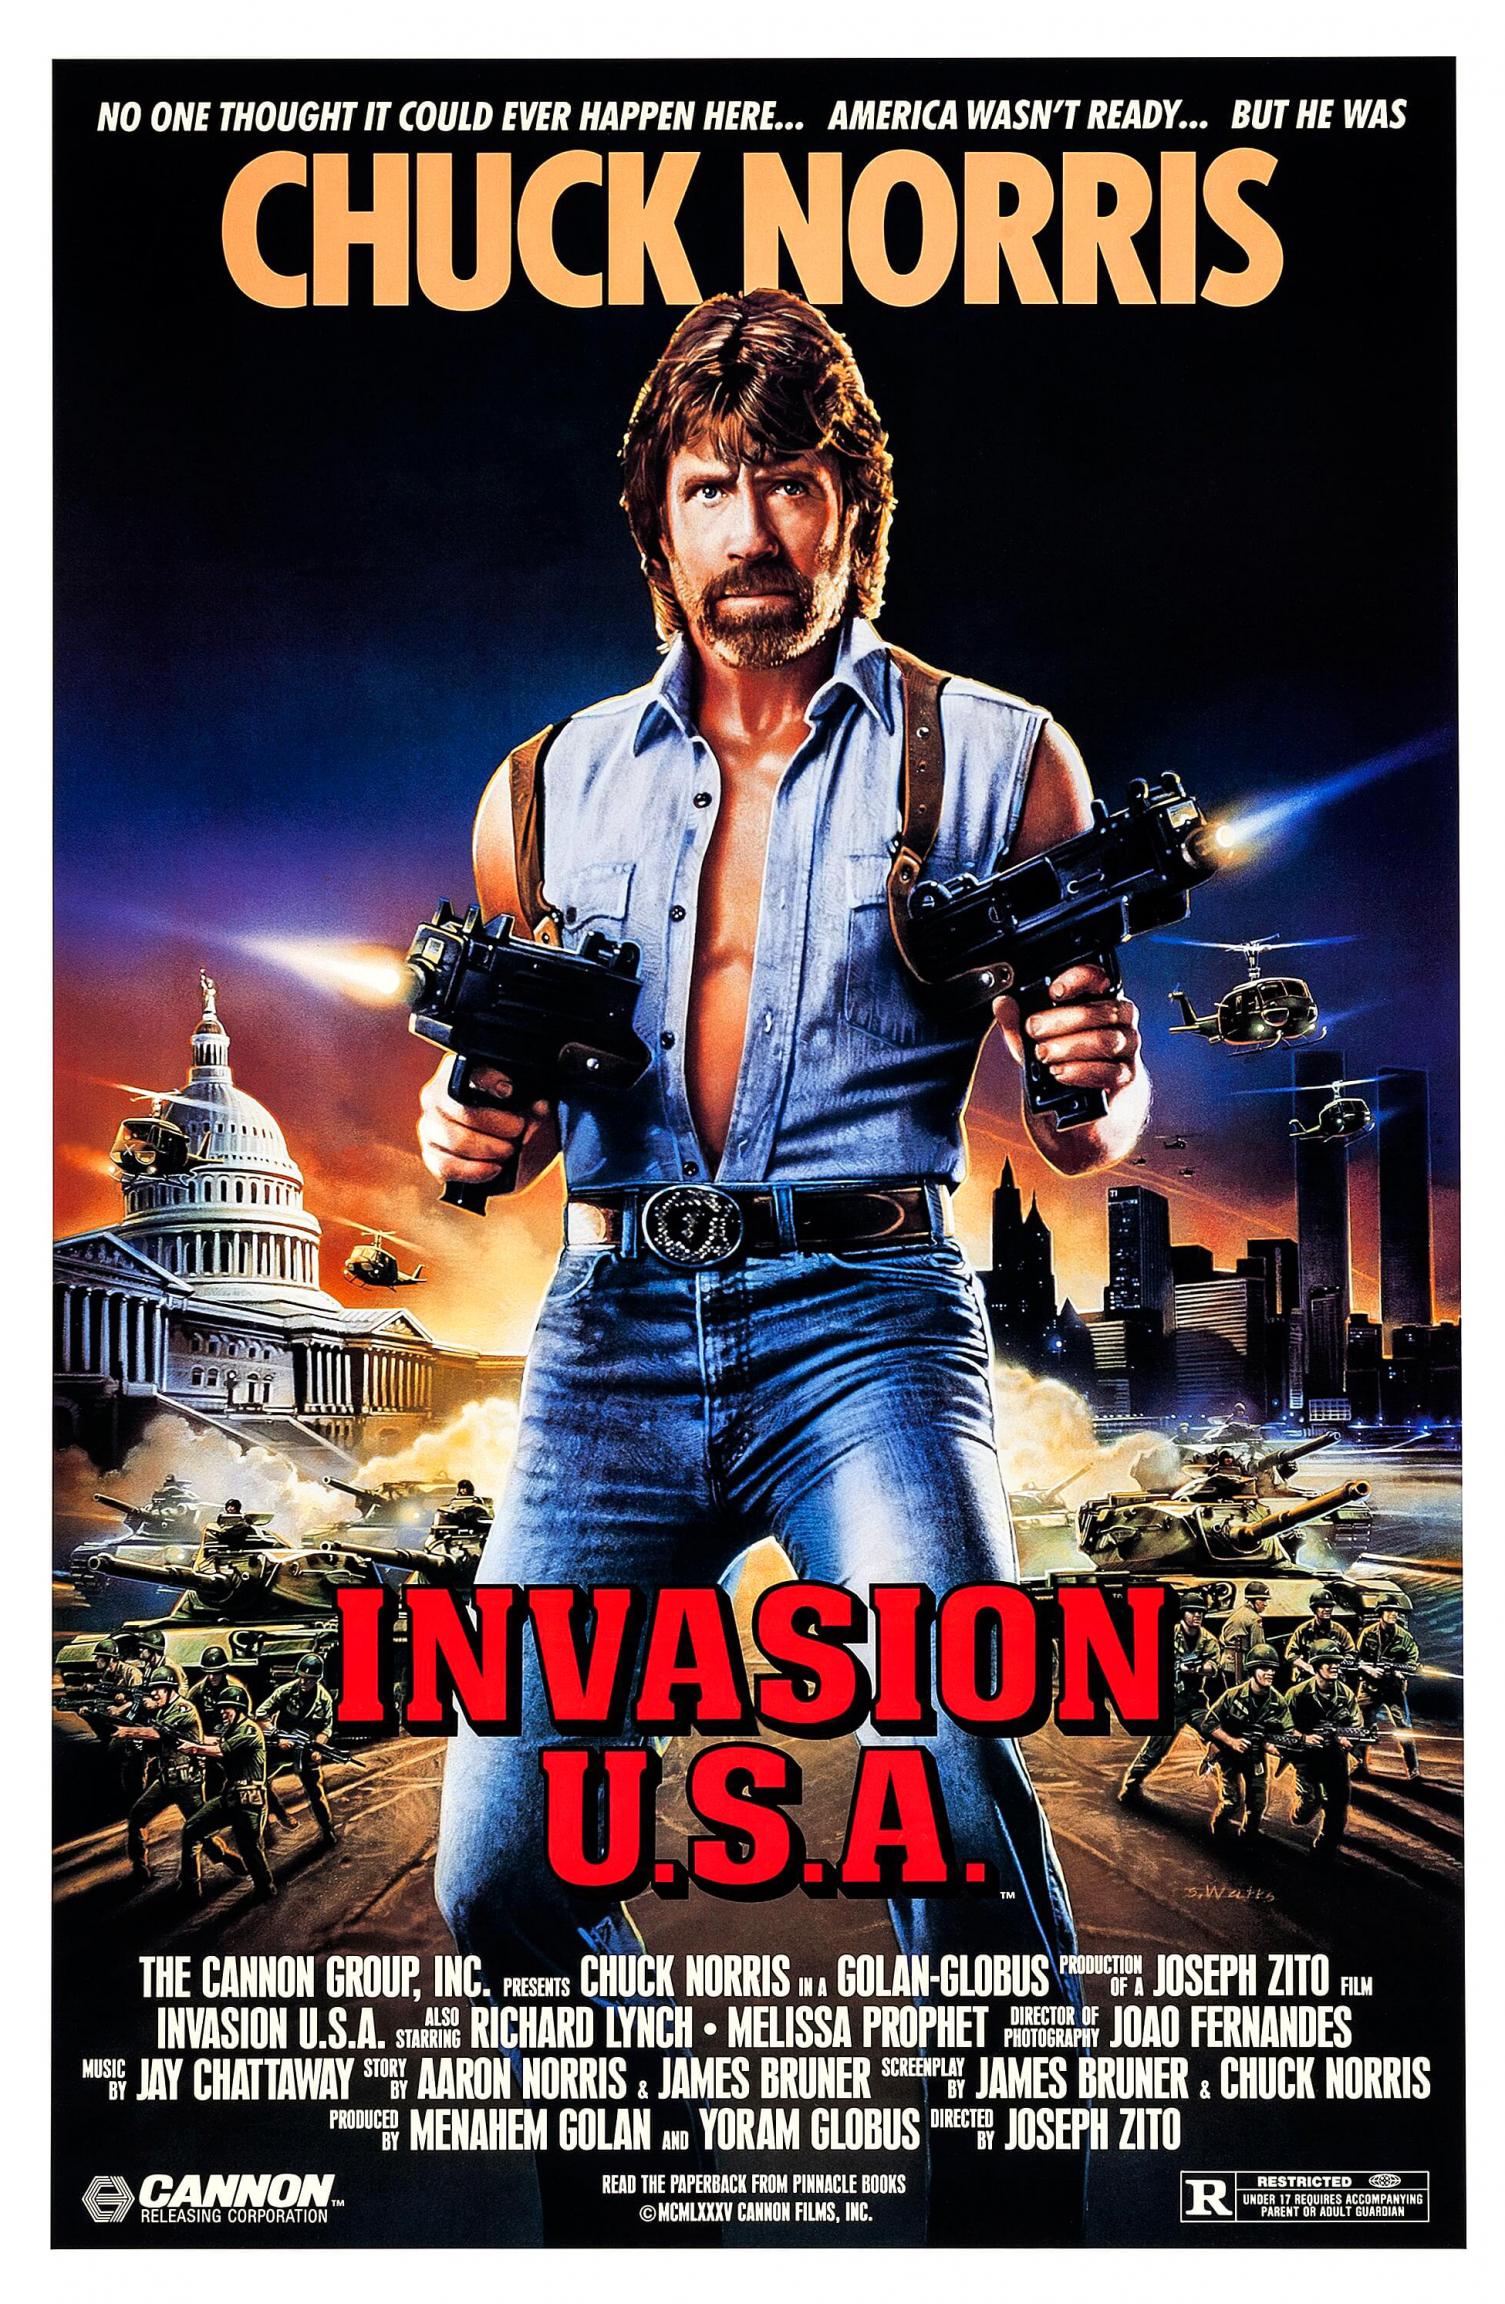 Stiahni si Filmy CZ/SK dabing     Invaze do USA / Invasion U.S.A. (1985)(CZ) = CSFD 43%